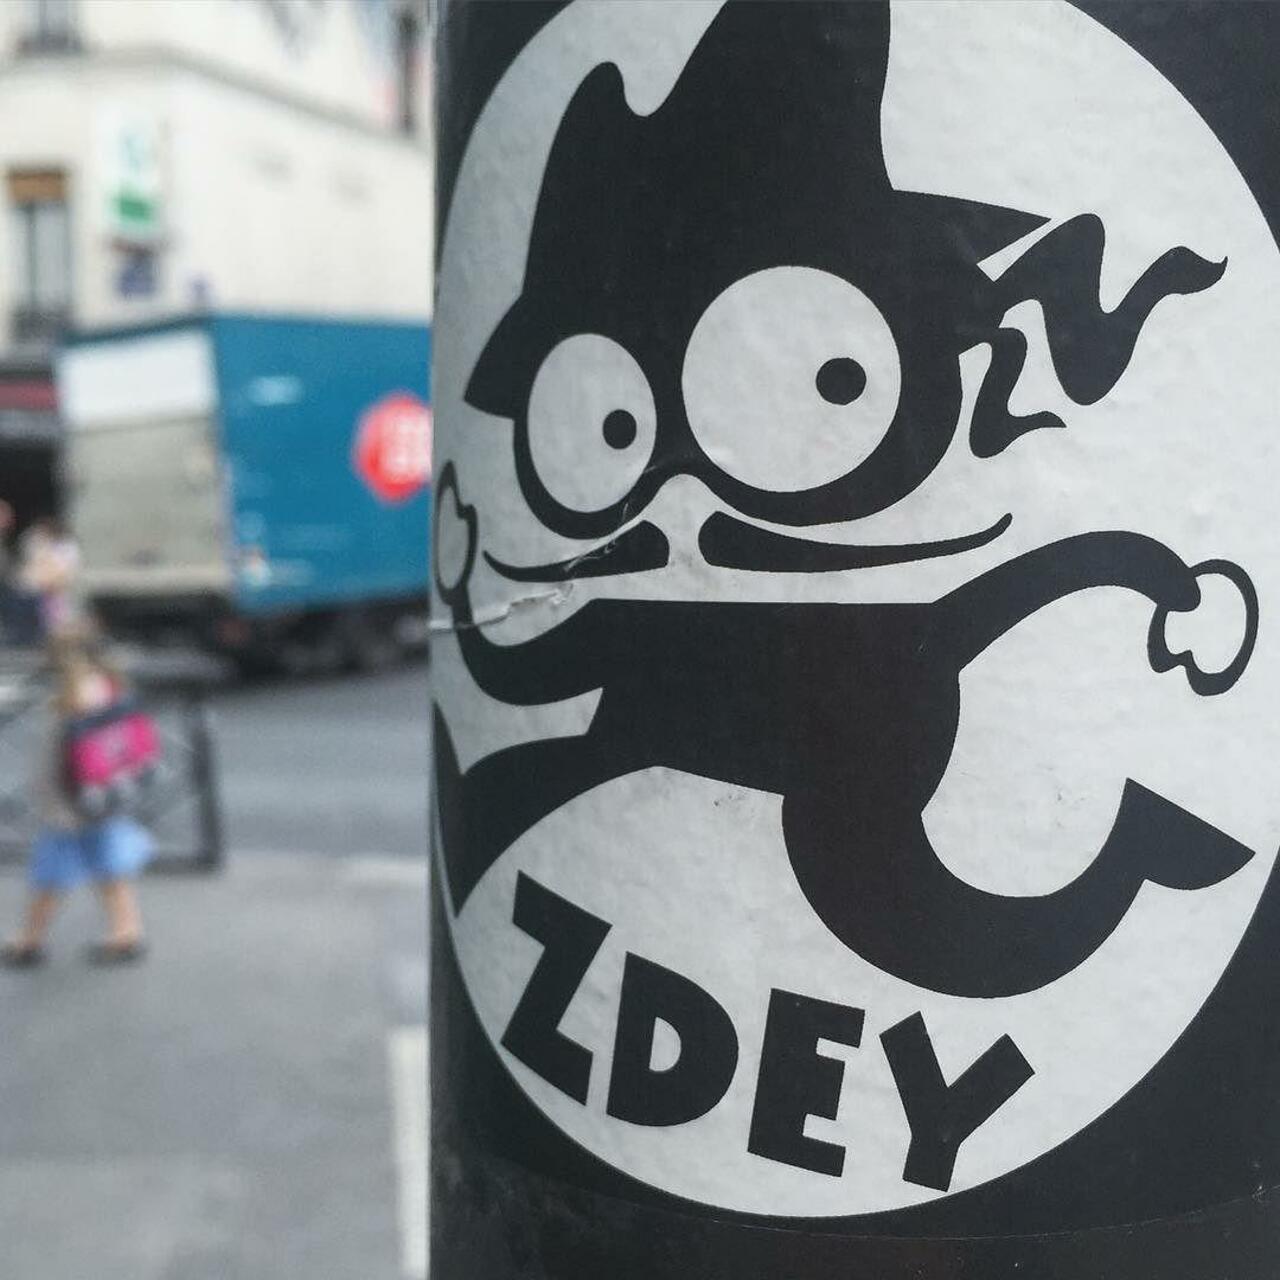 #Paris #graffiti photo by @catscoffeecreativity http://ift.tt/1VXZGvU #StreetArt http://t.co/l0veWWB5yk